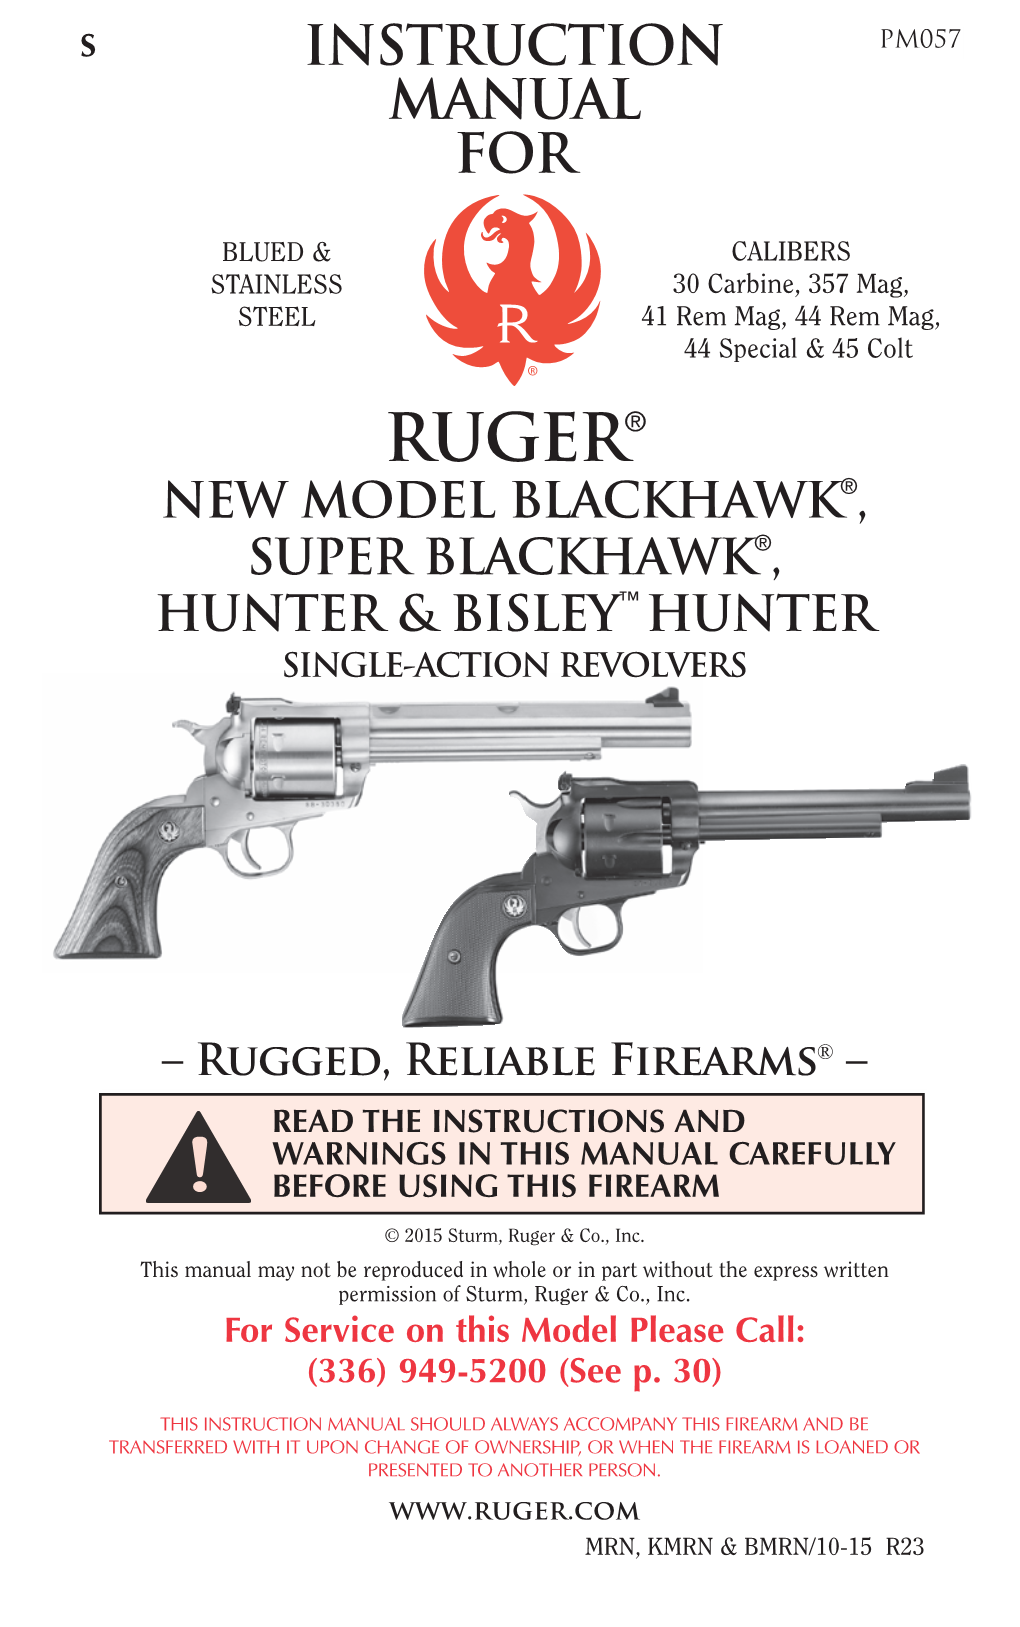 Super Blackhawk®, Hunter & Bisley™ Hunter Single-Action Revolvers